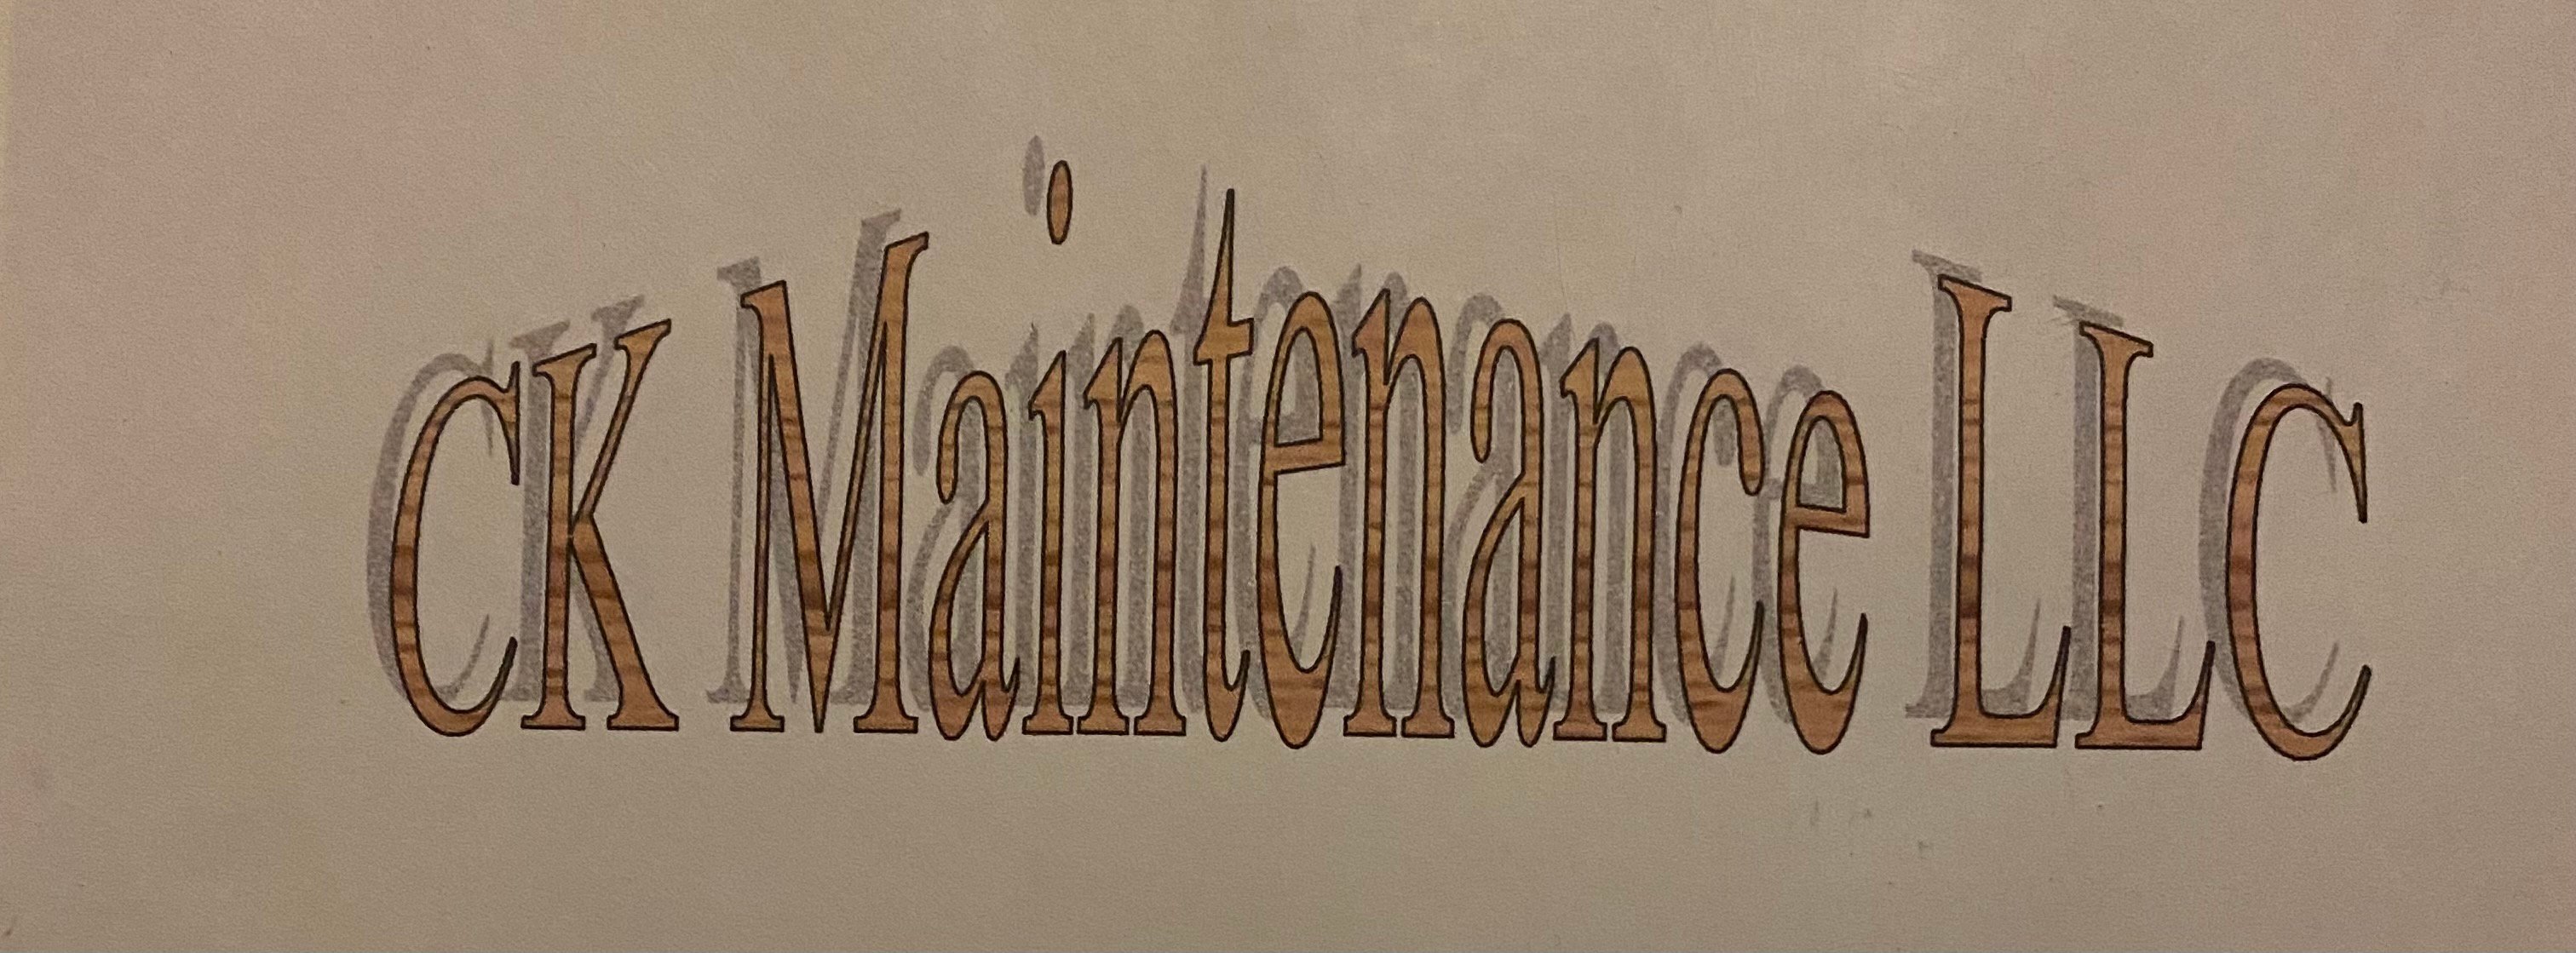 CK Maintenance Logo